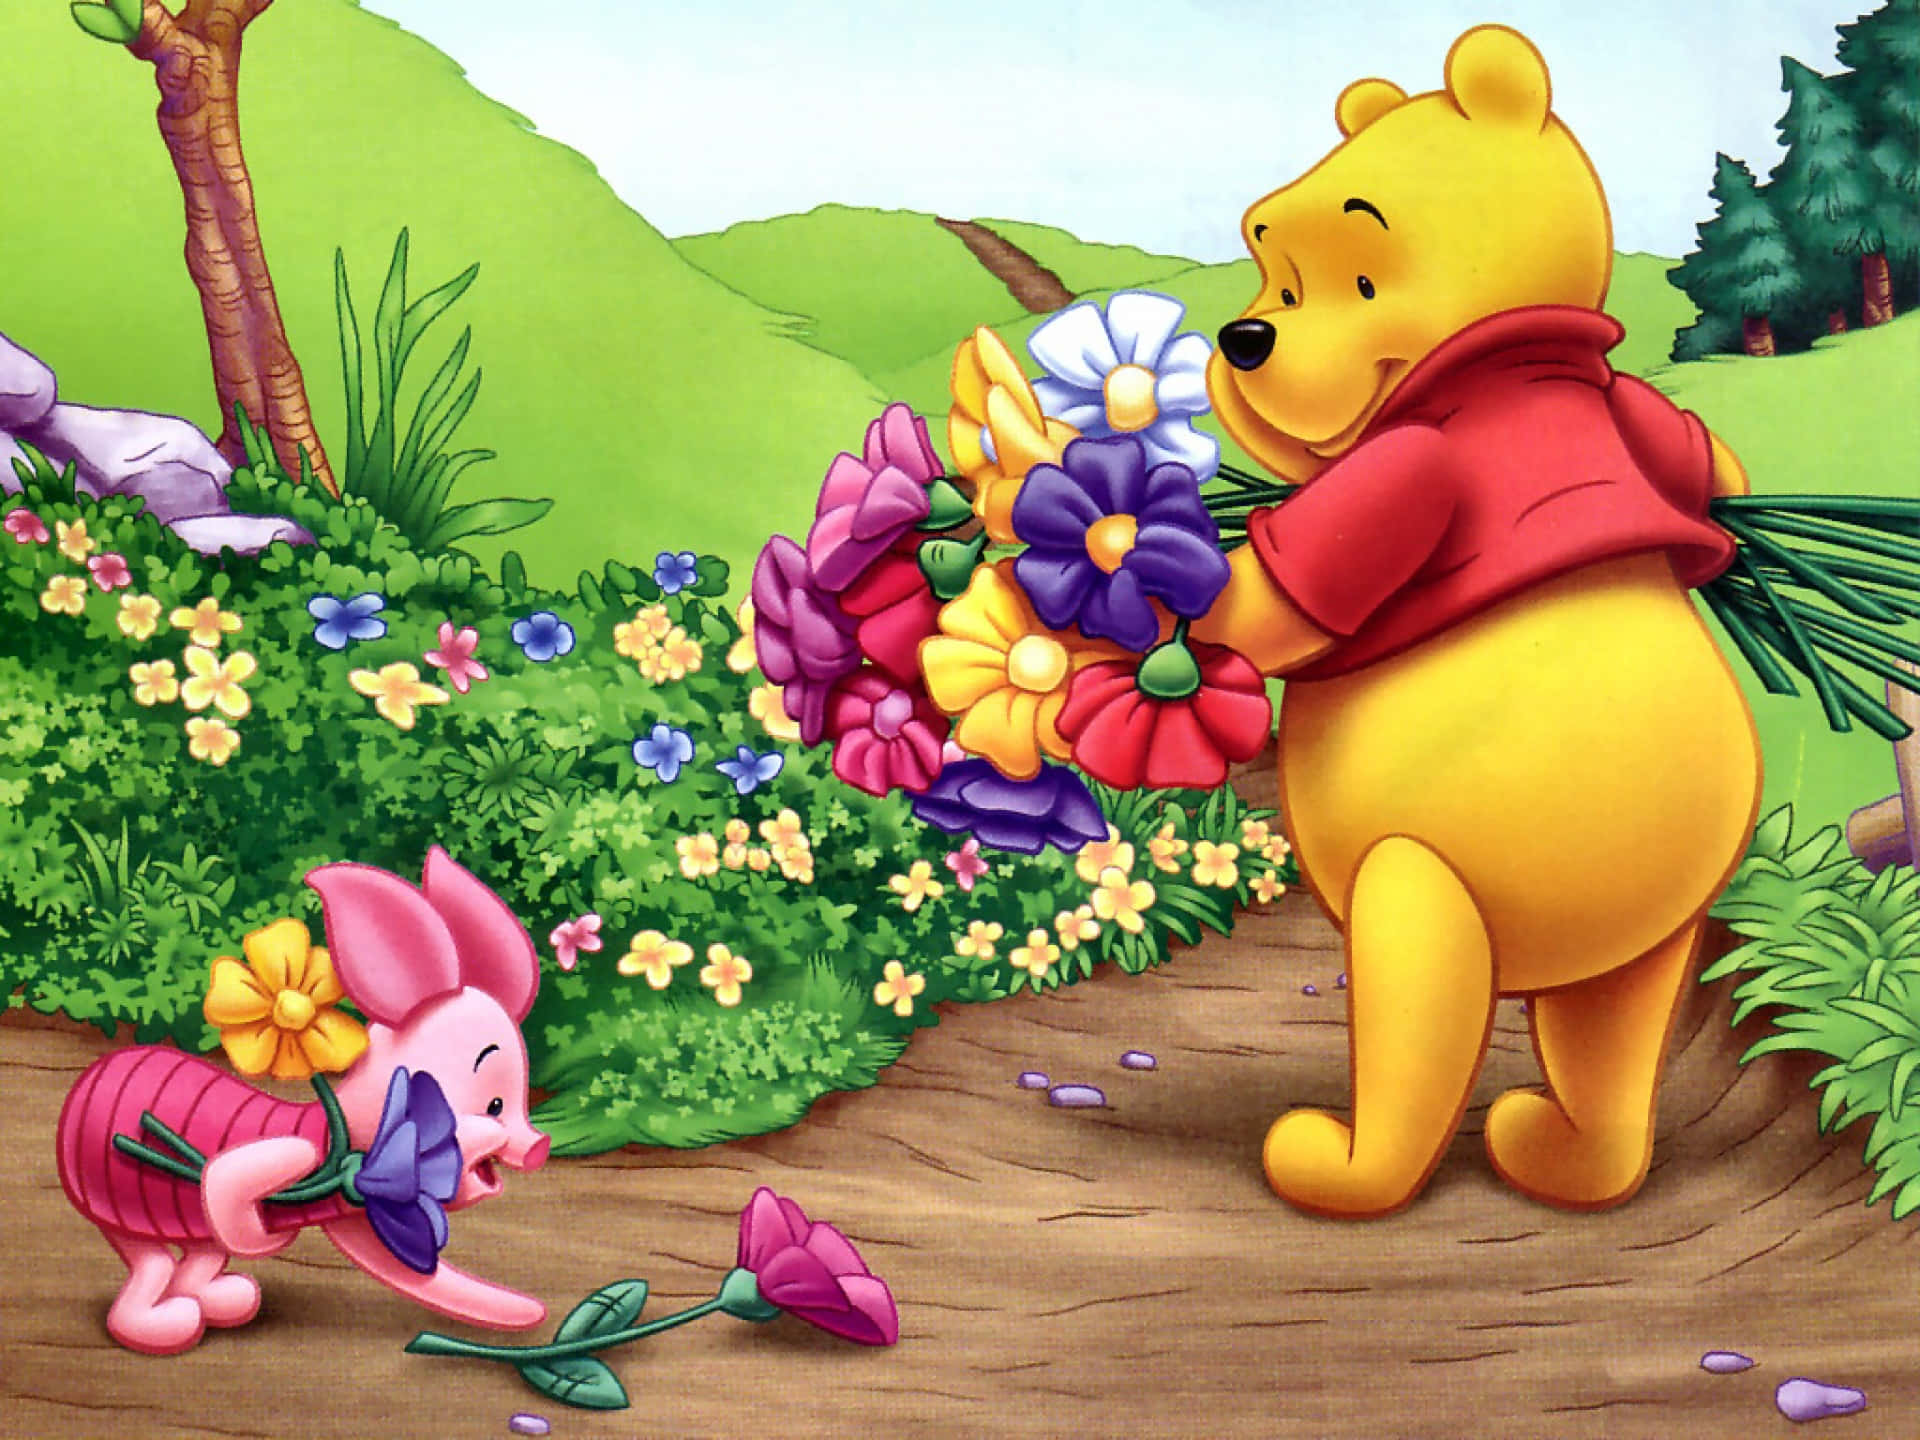 Everyone’s Favorite Bear: Winnie The Pooh